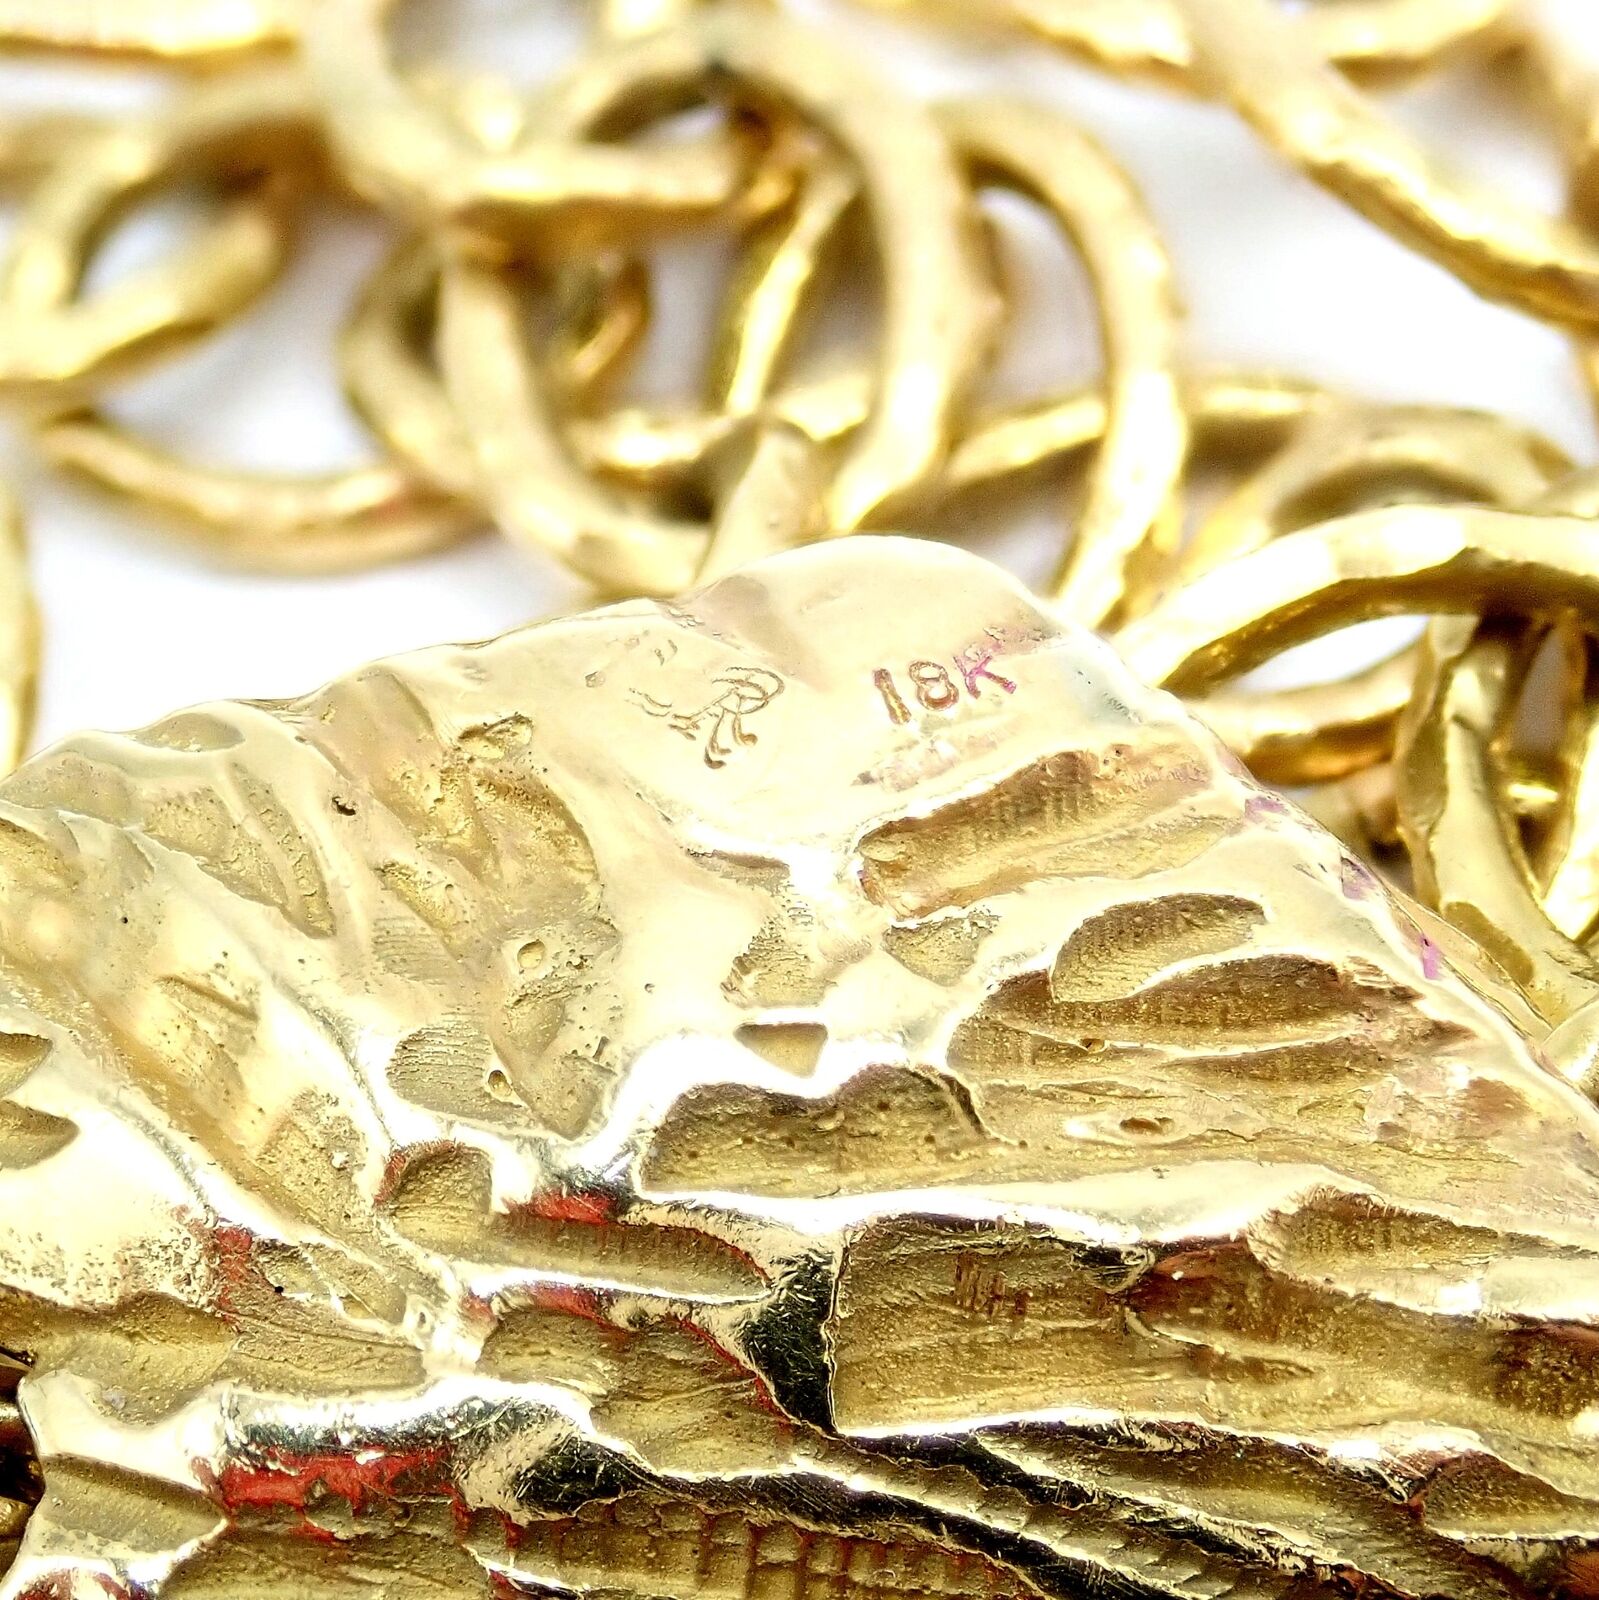 Loree Rodkin Jewelry & Watches:Fine Jewelry:Necklaces & Pendants Loree Rodkin 18k Yellow Gold 6.5ct Diamond Arrowhead Jackie Collins 32" Necklace